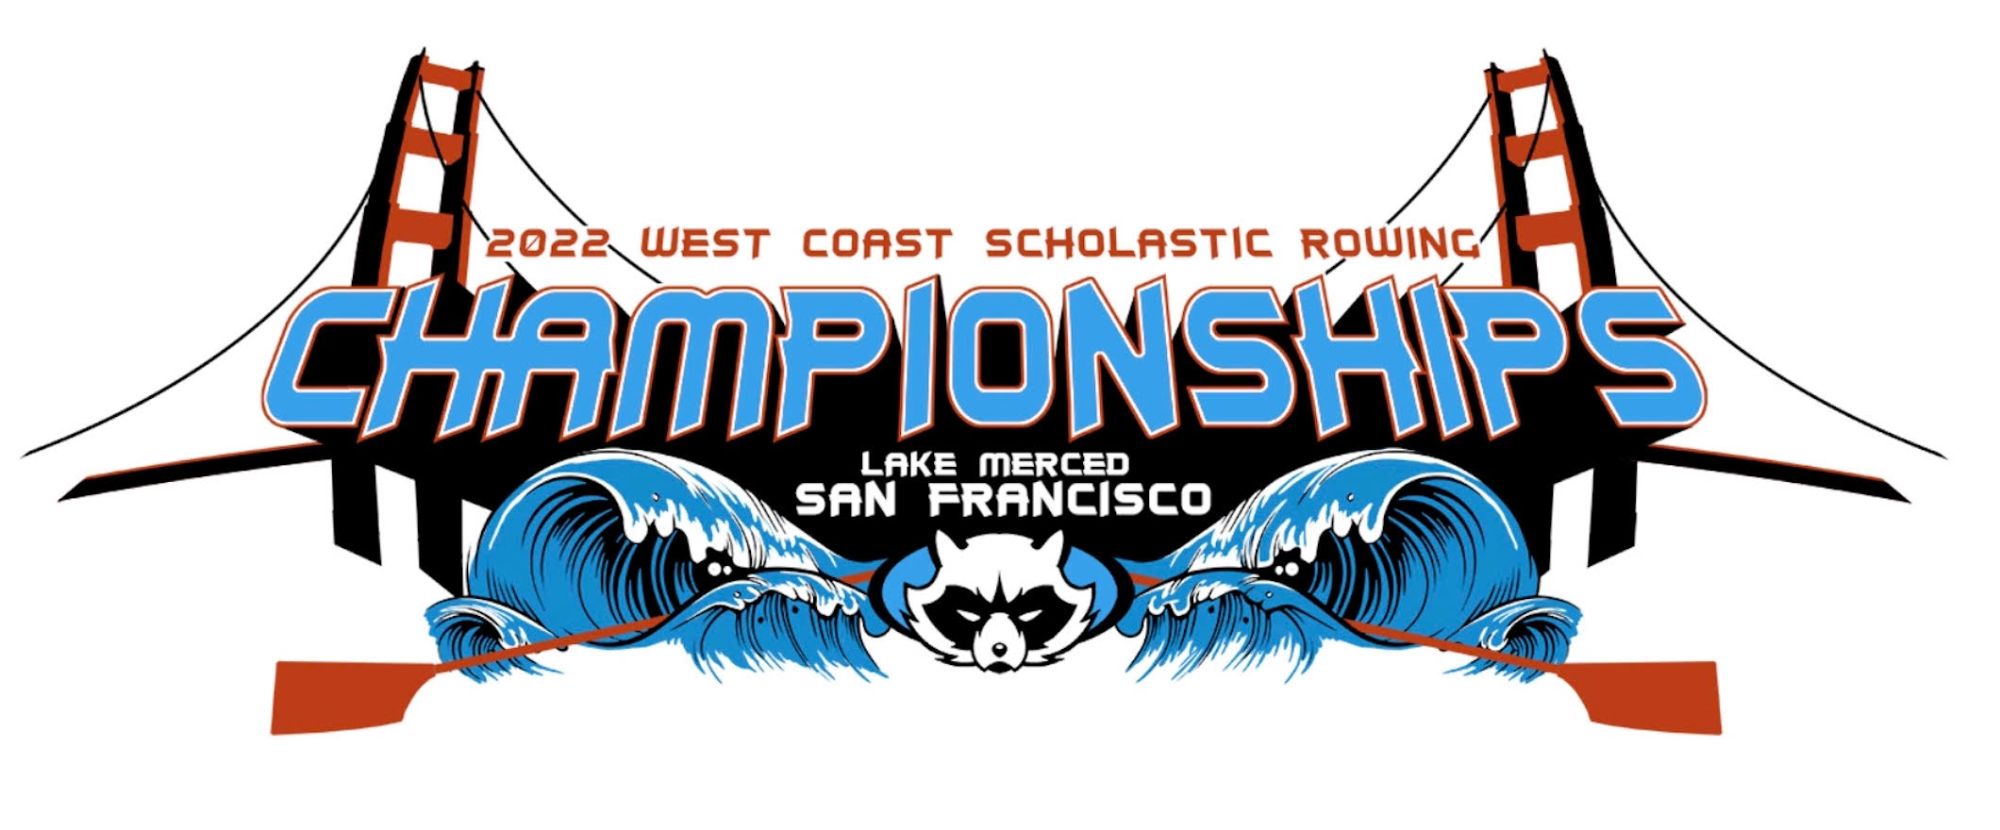 Logo: West Coast Scholastic Rowing Championships